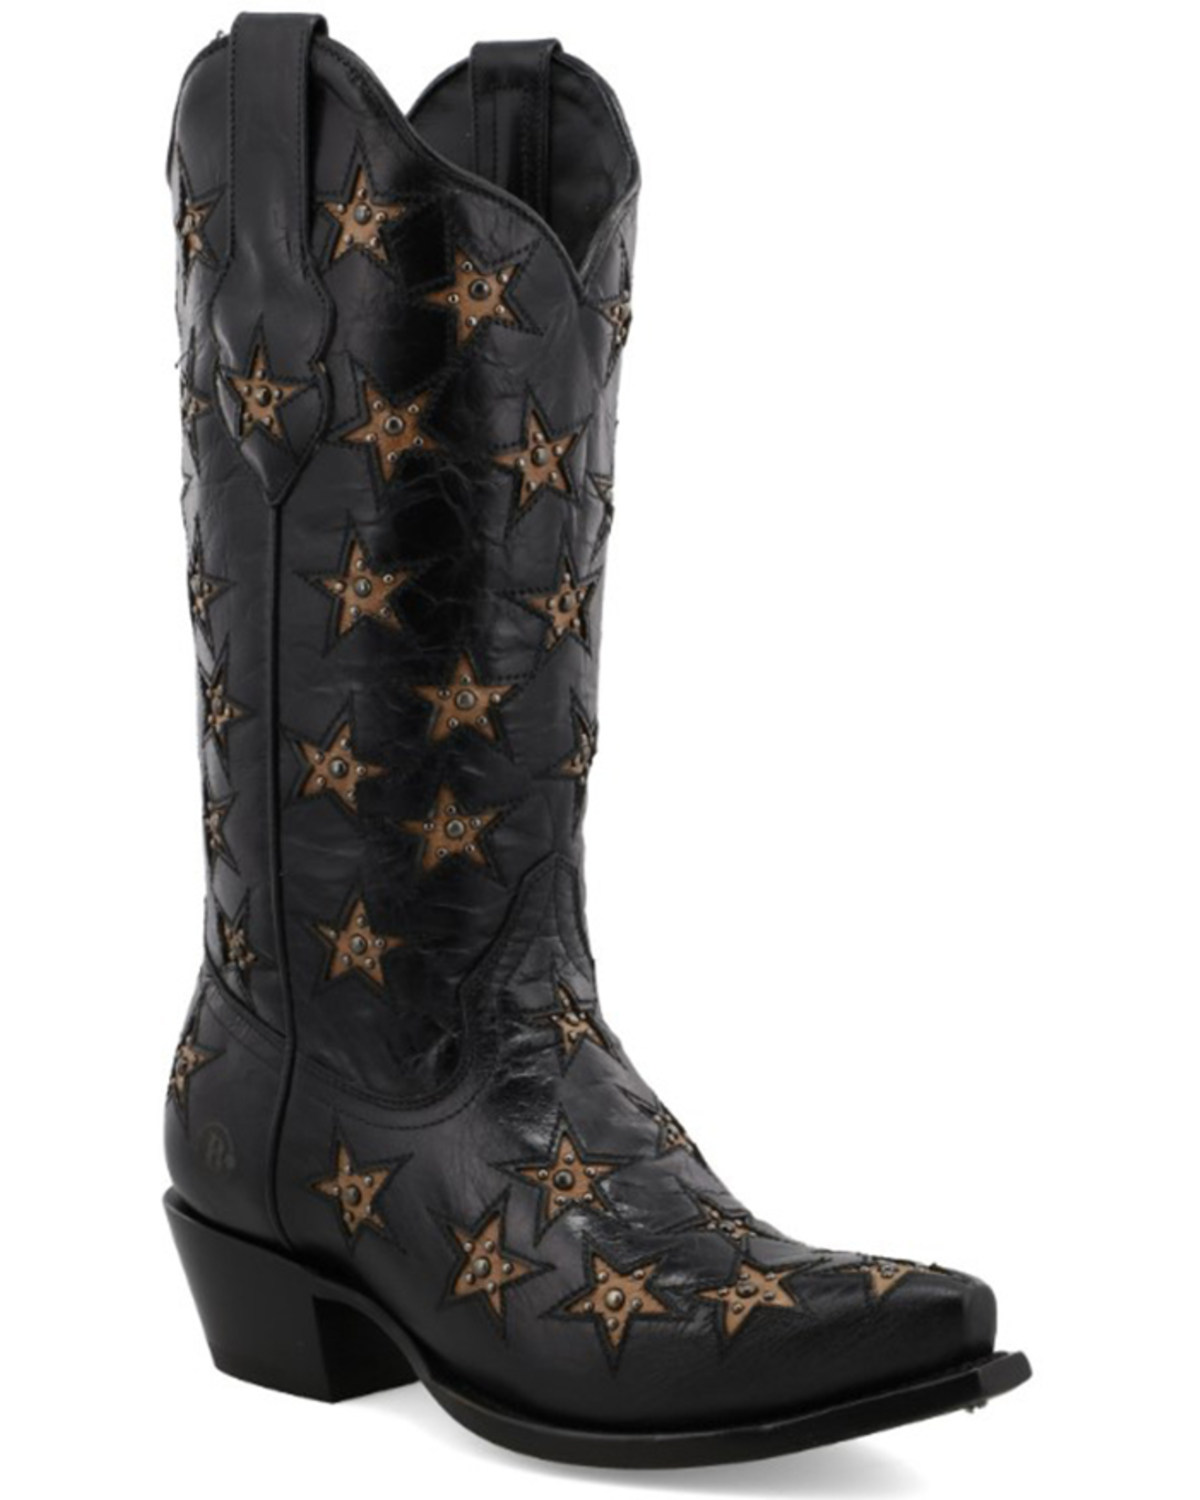 Black Star Women's Marfa Inlay Studded Leather Western Boot - Snip Toe